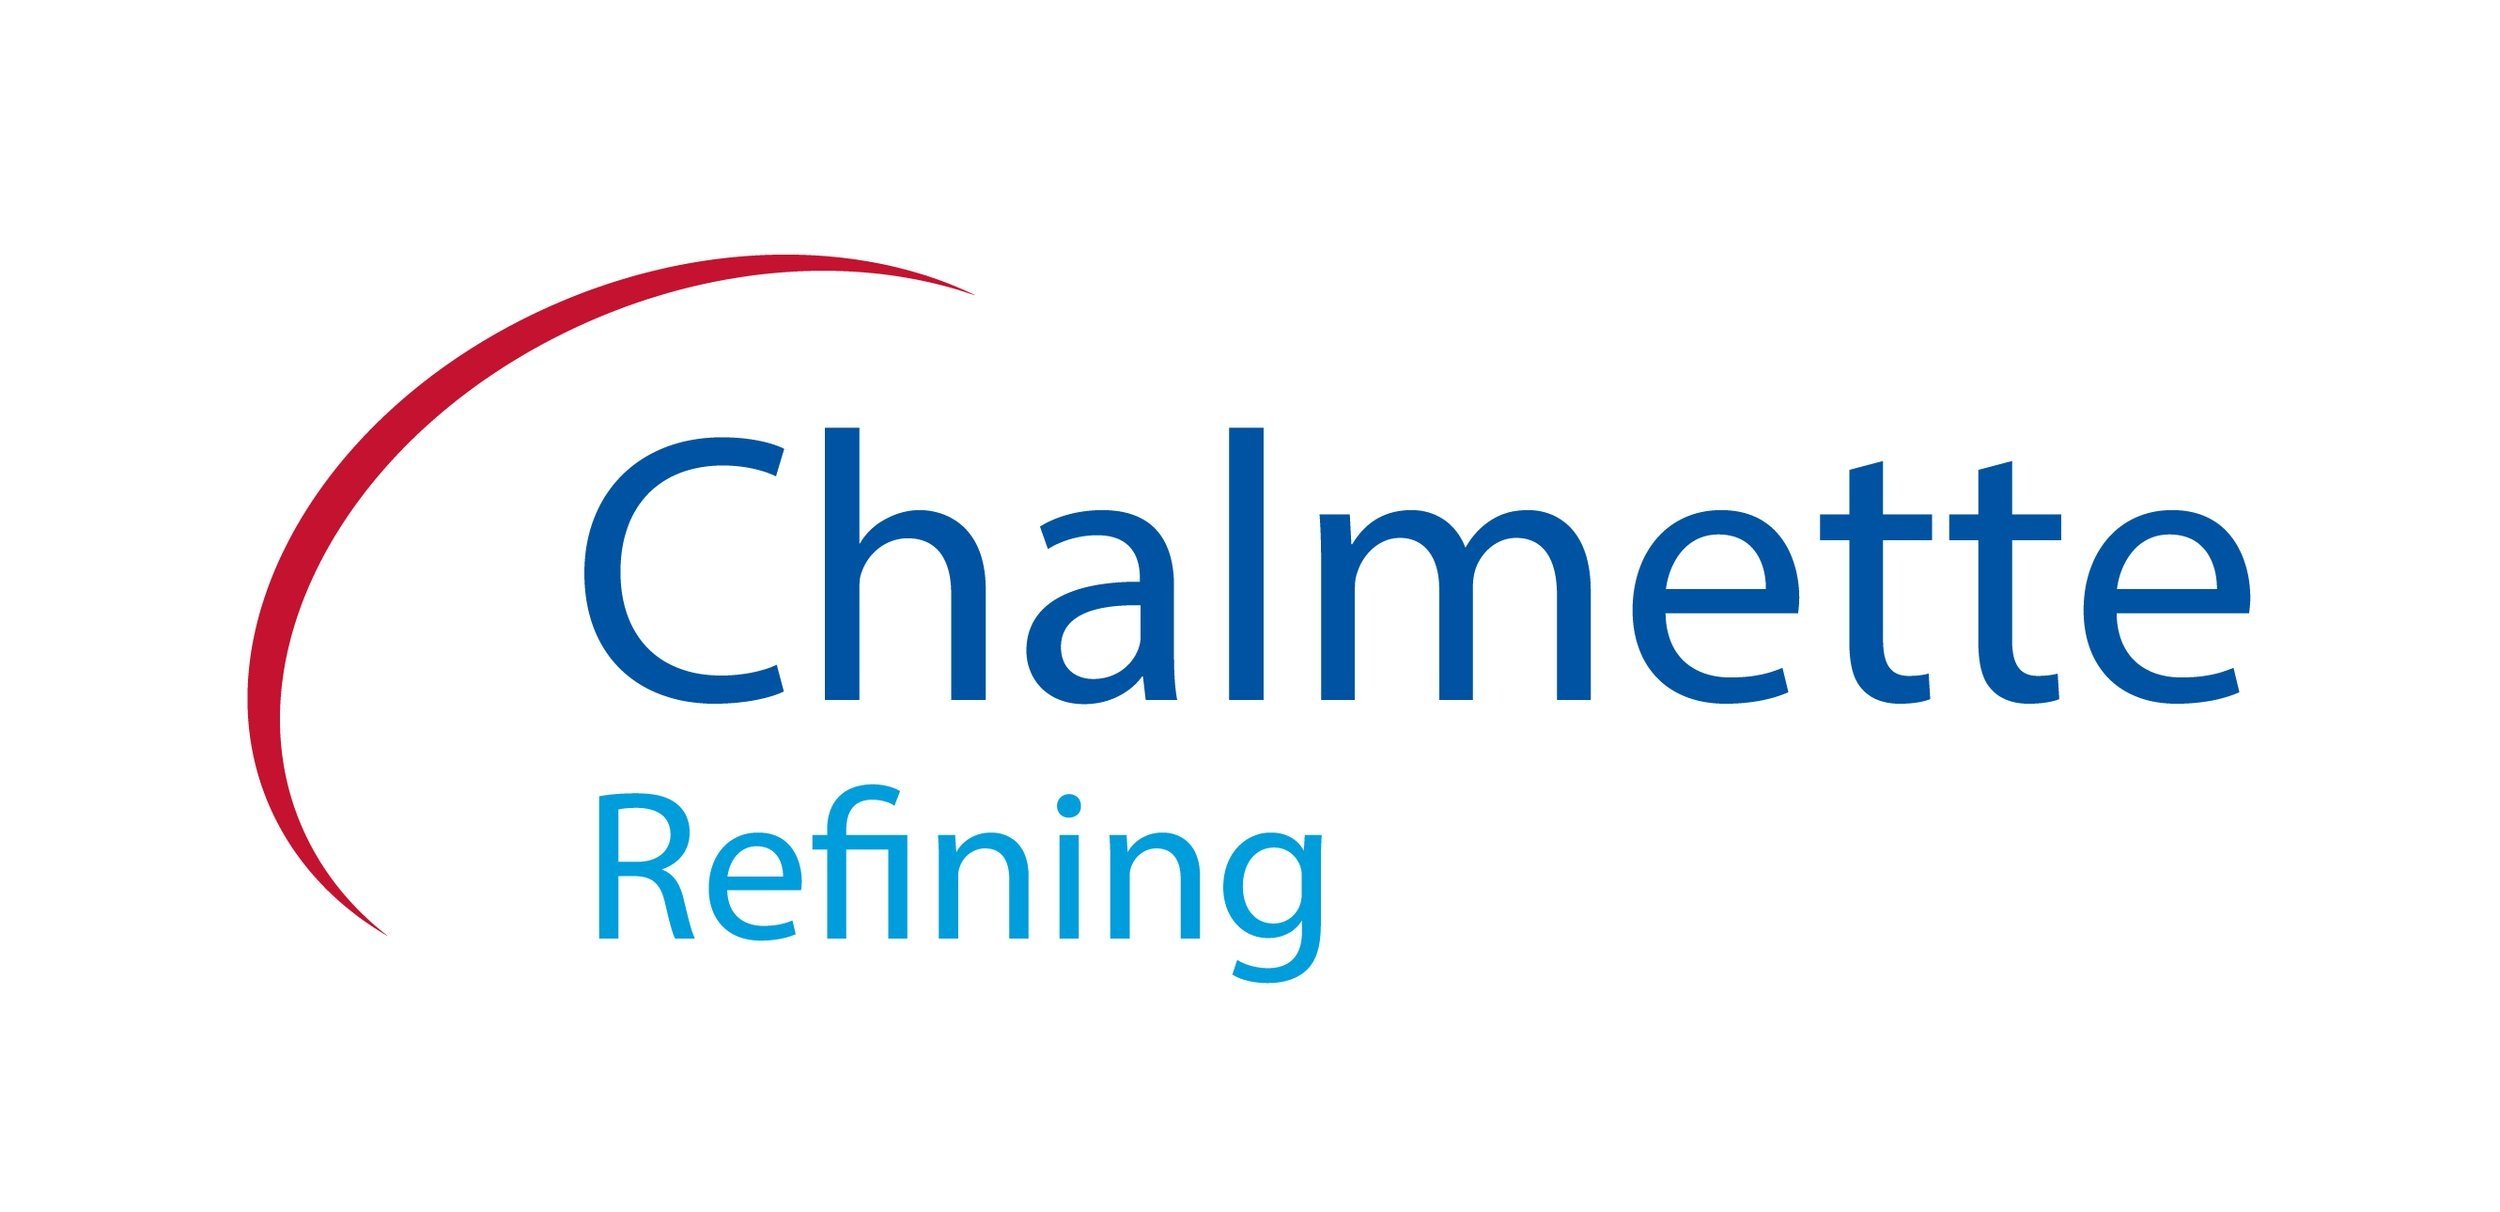 Chalmette+Refining+logo.jpg